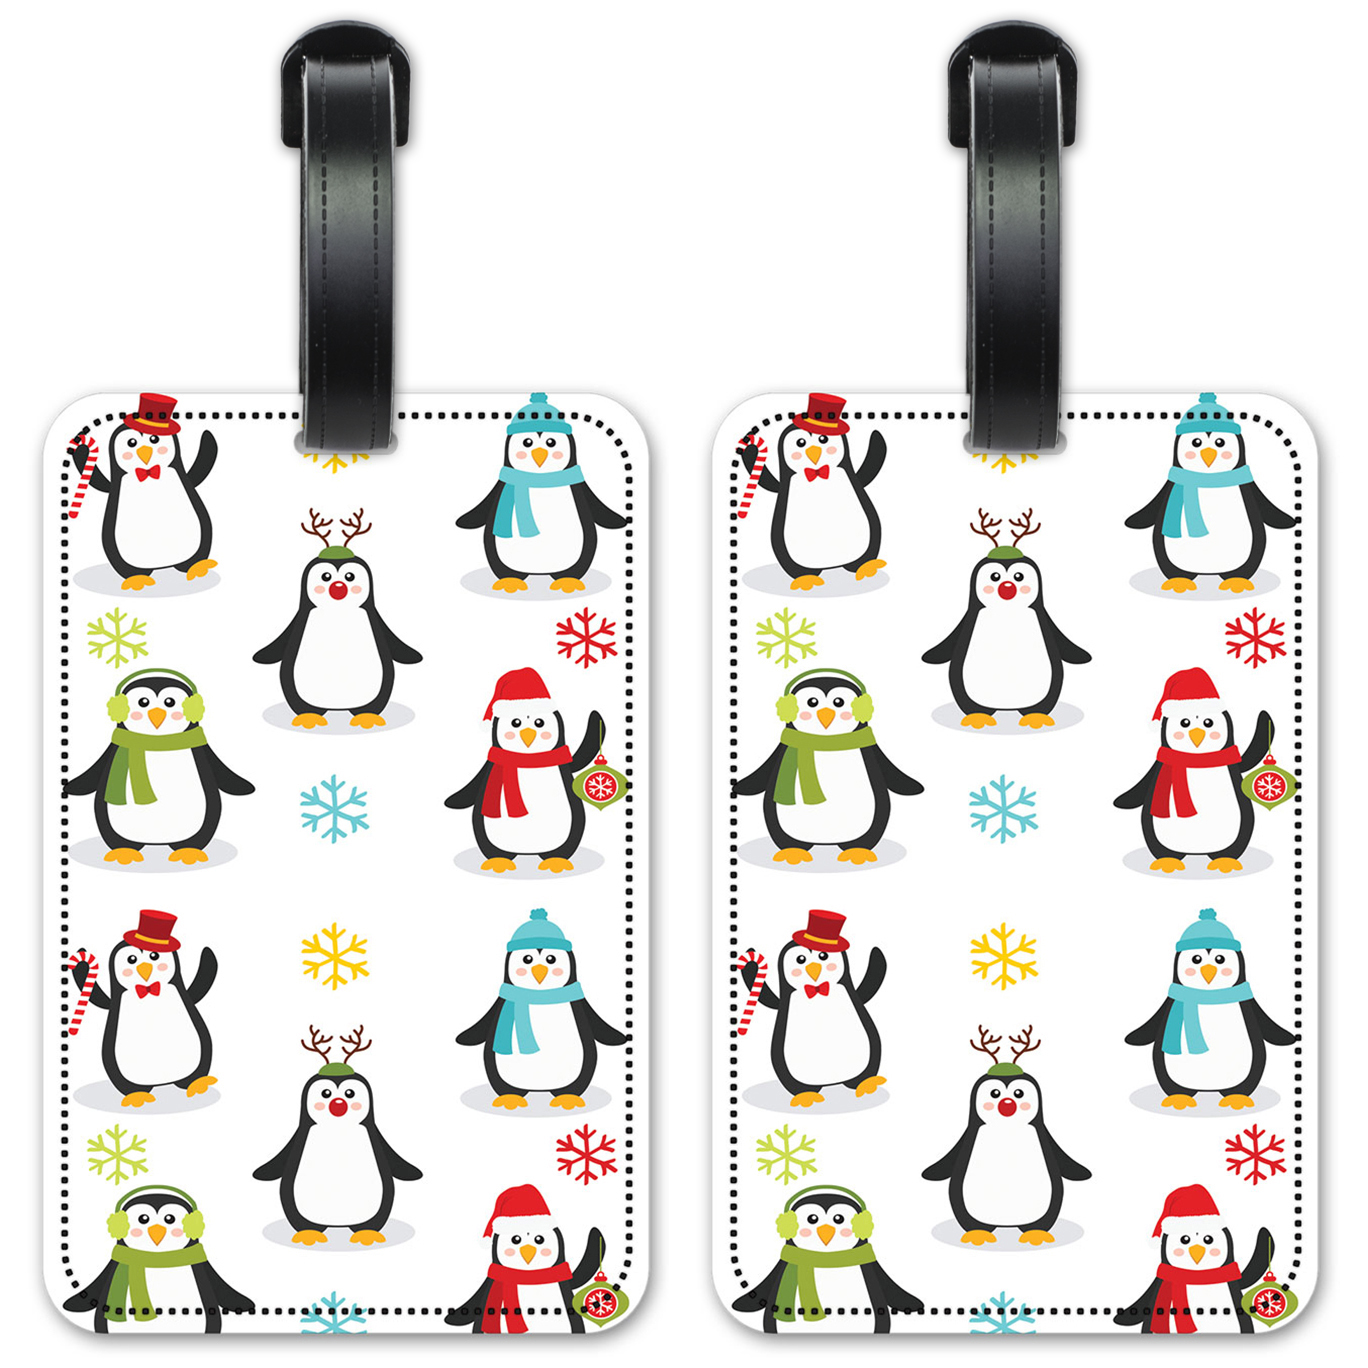 Penguins - #8730